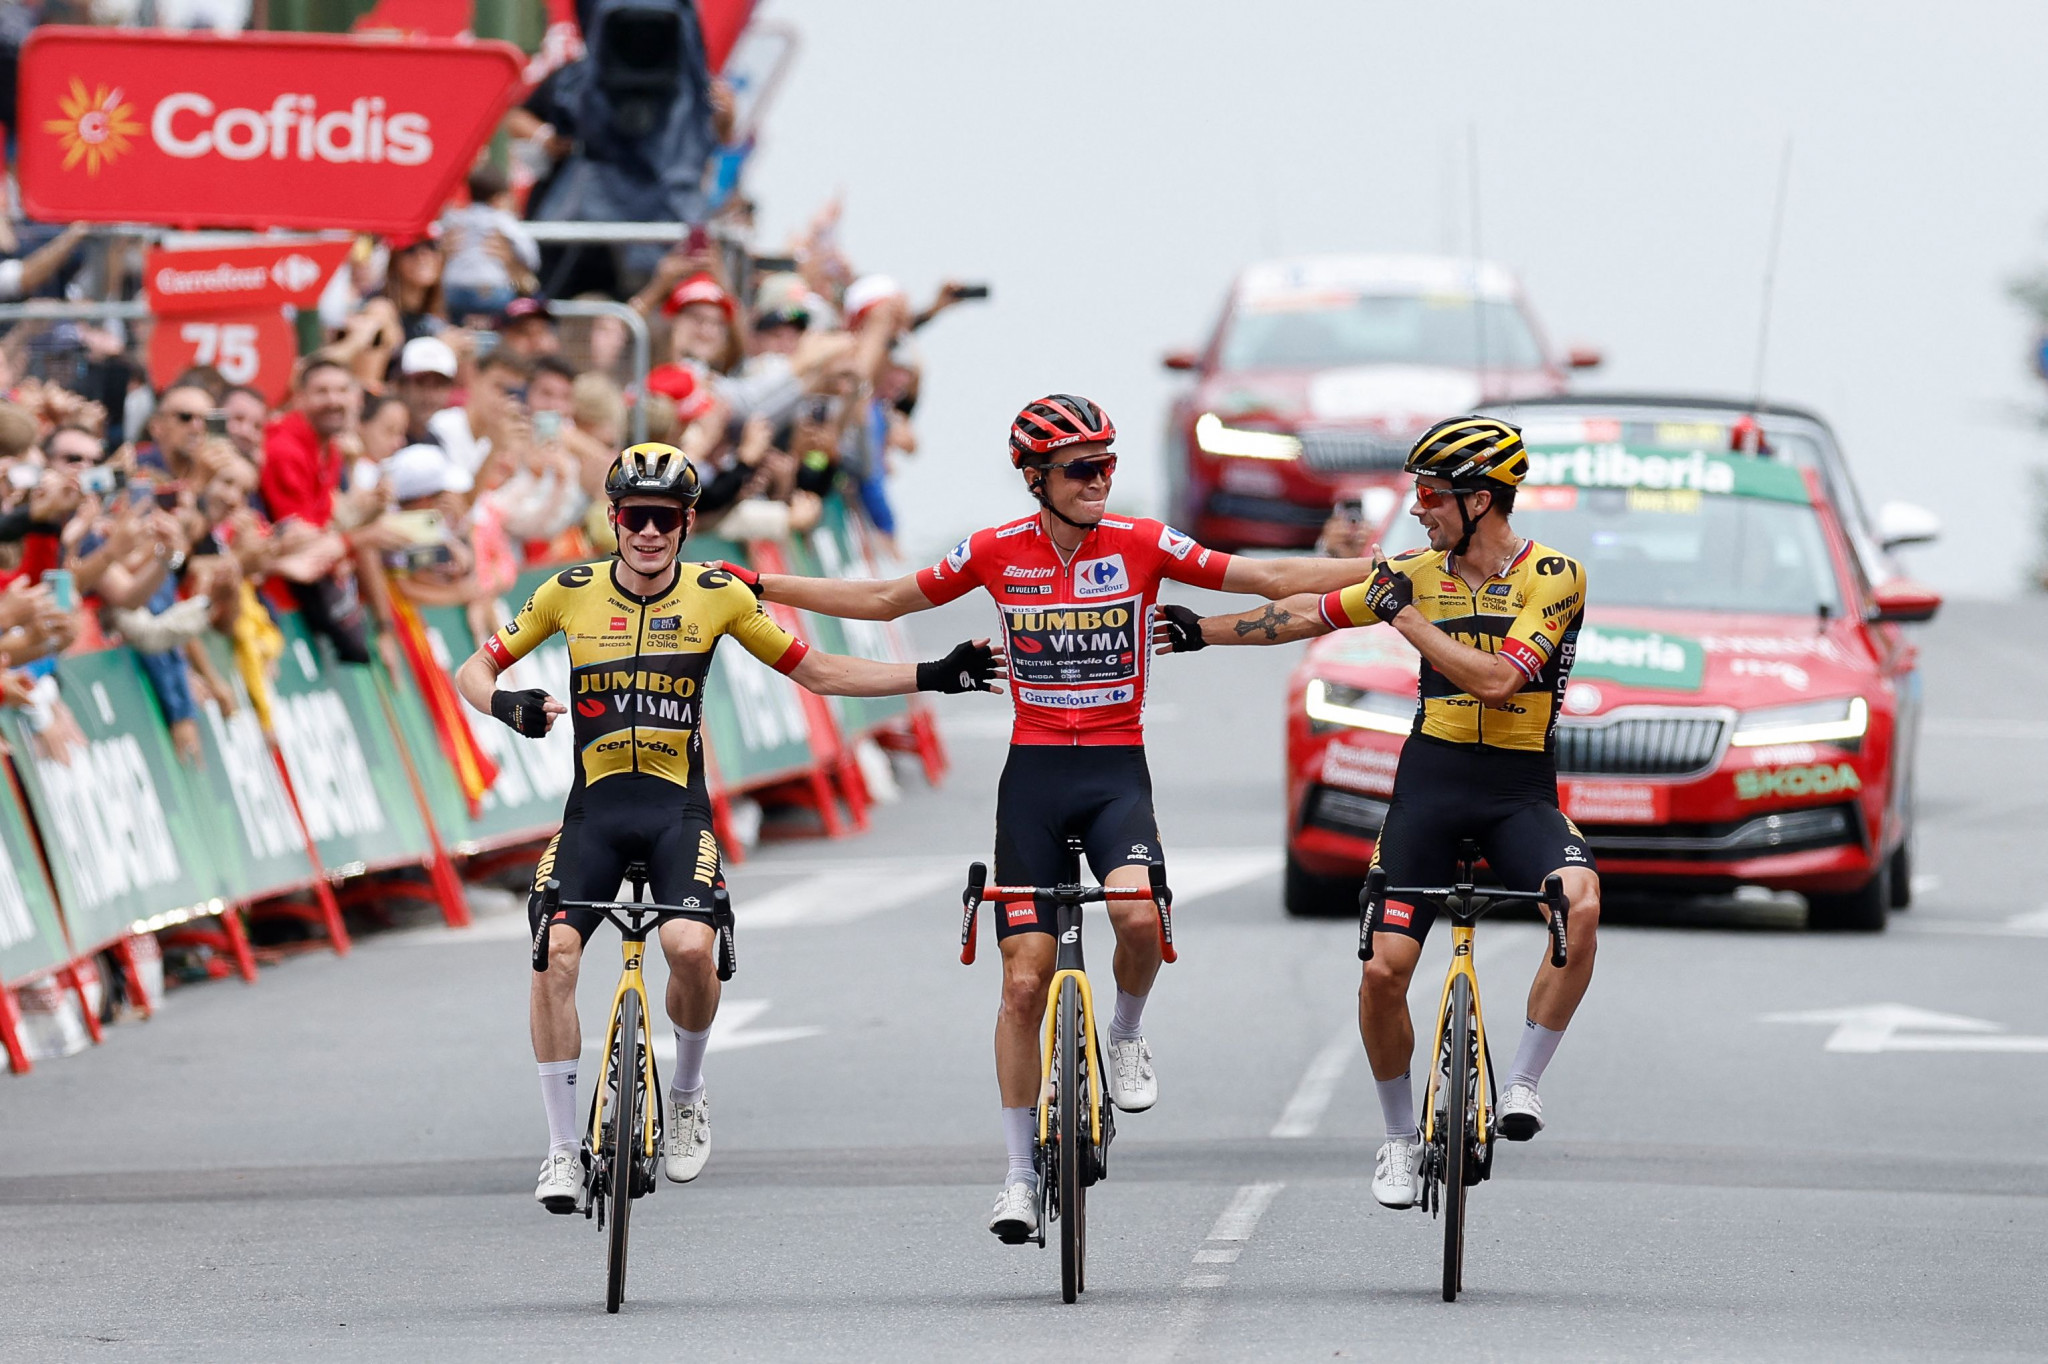 Kuss set to clinch Vuelta a España title as Jumbo-Visma trio cruise across line